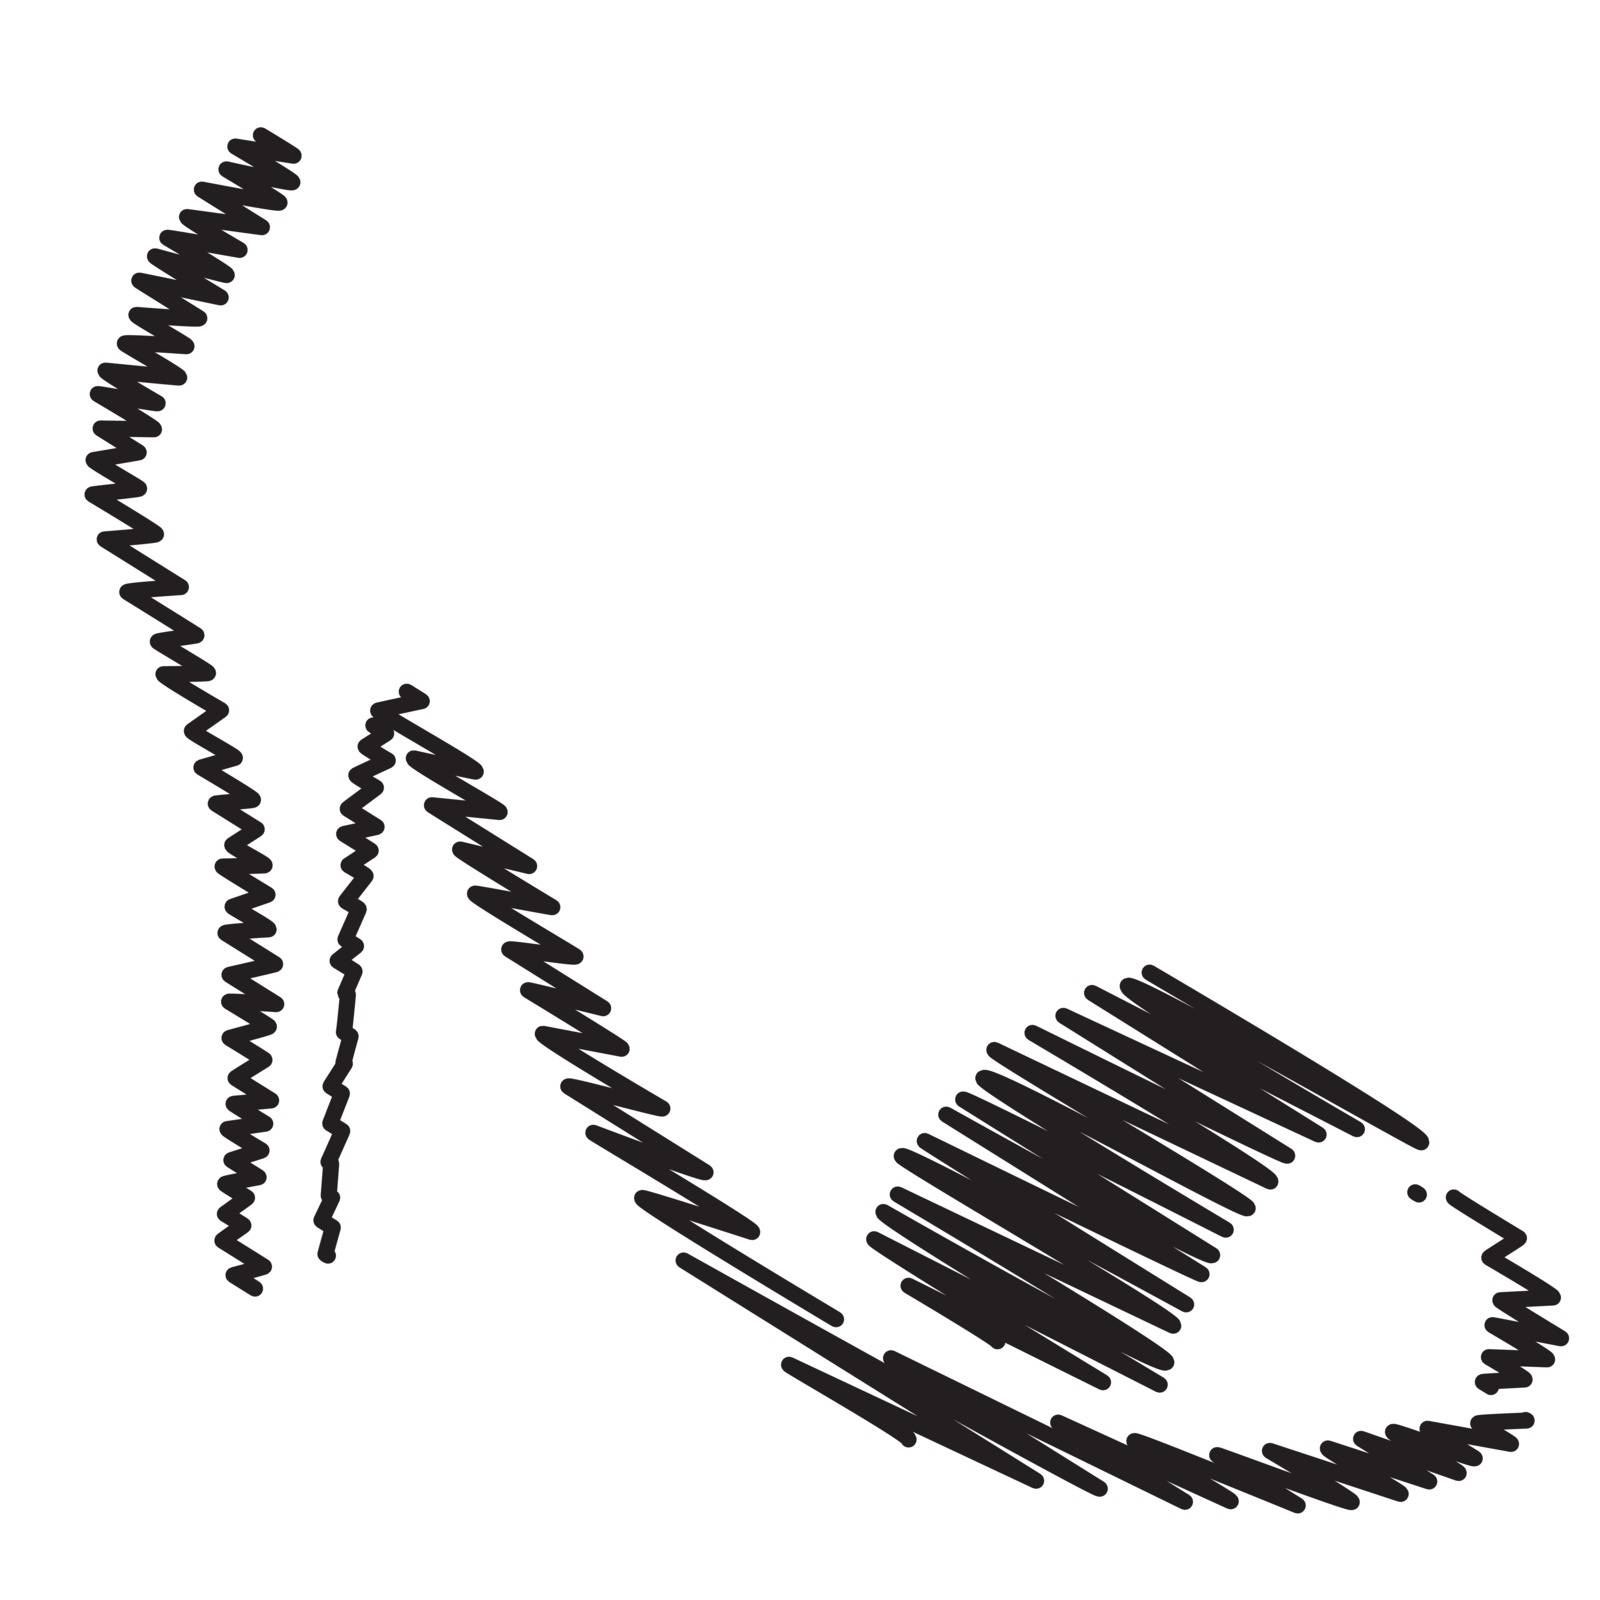 Abstract logo for designer footwear by shawlinmohd